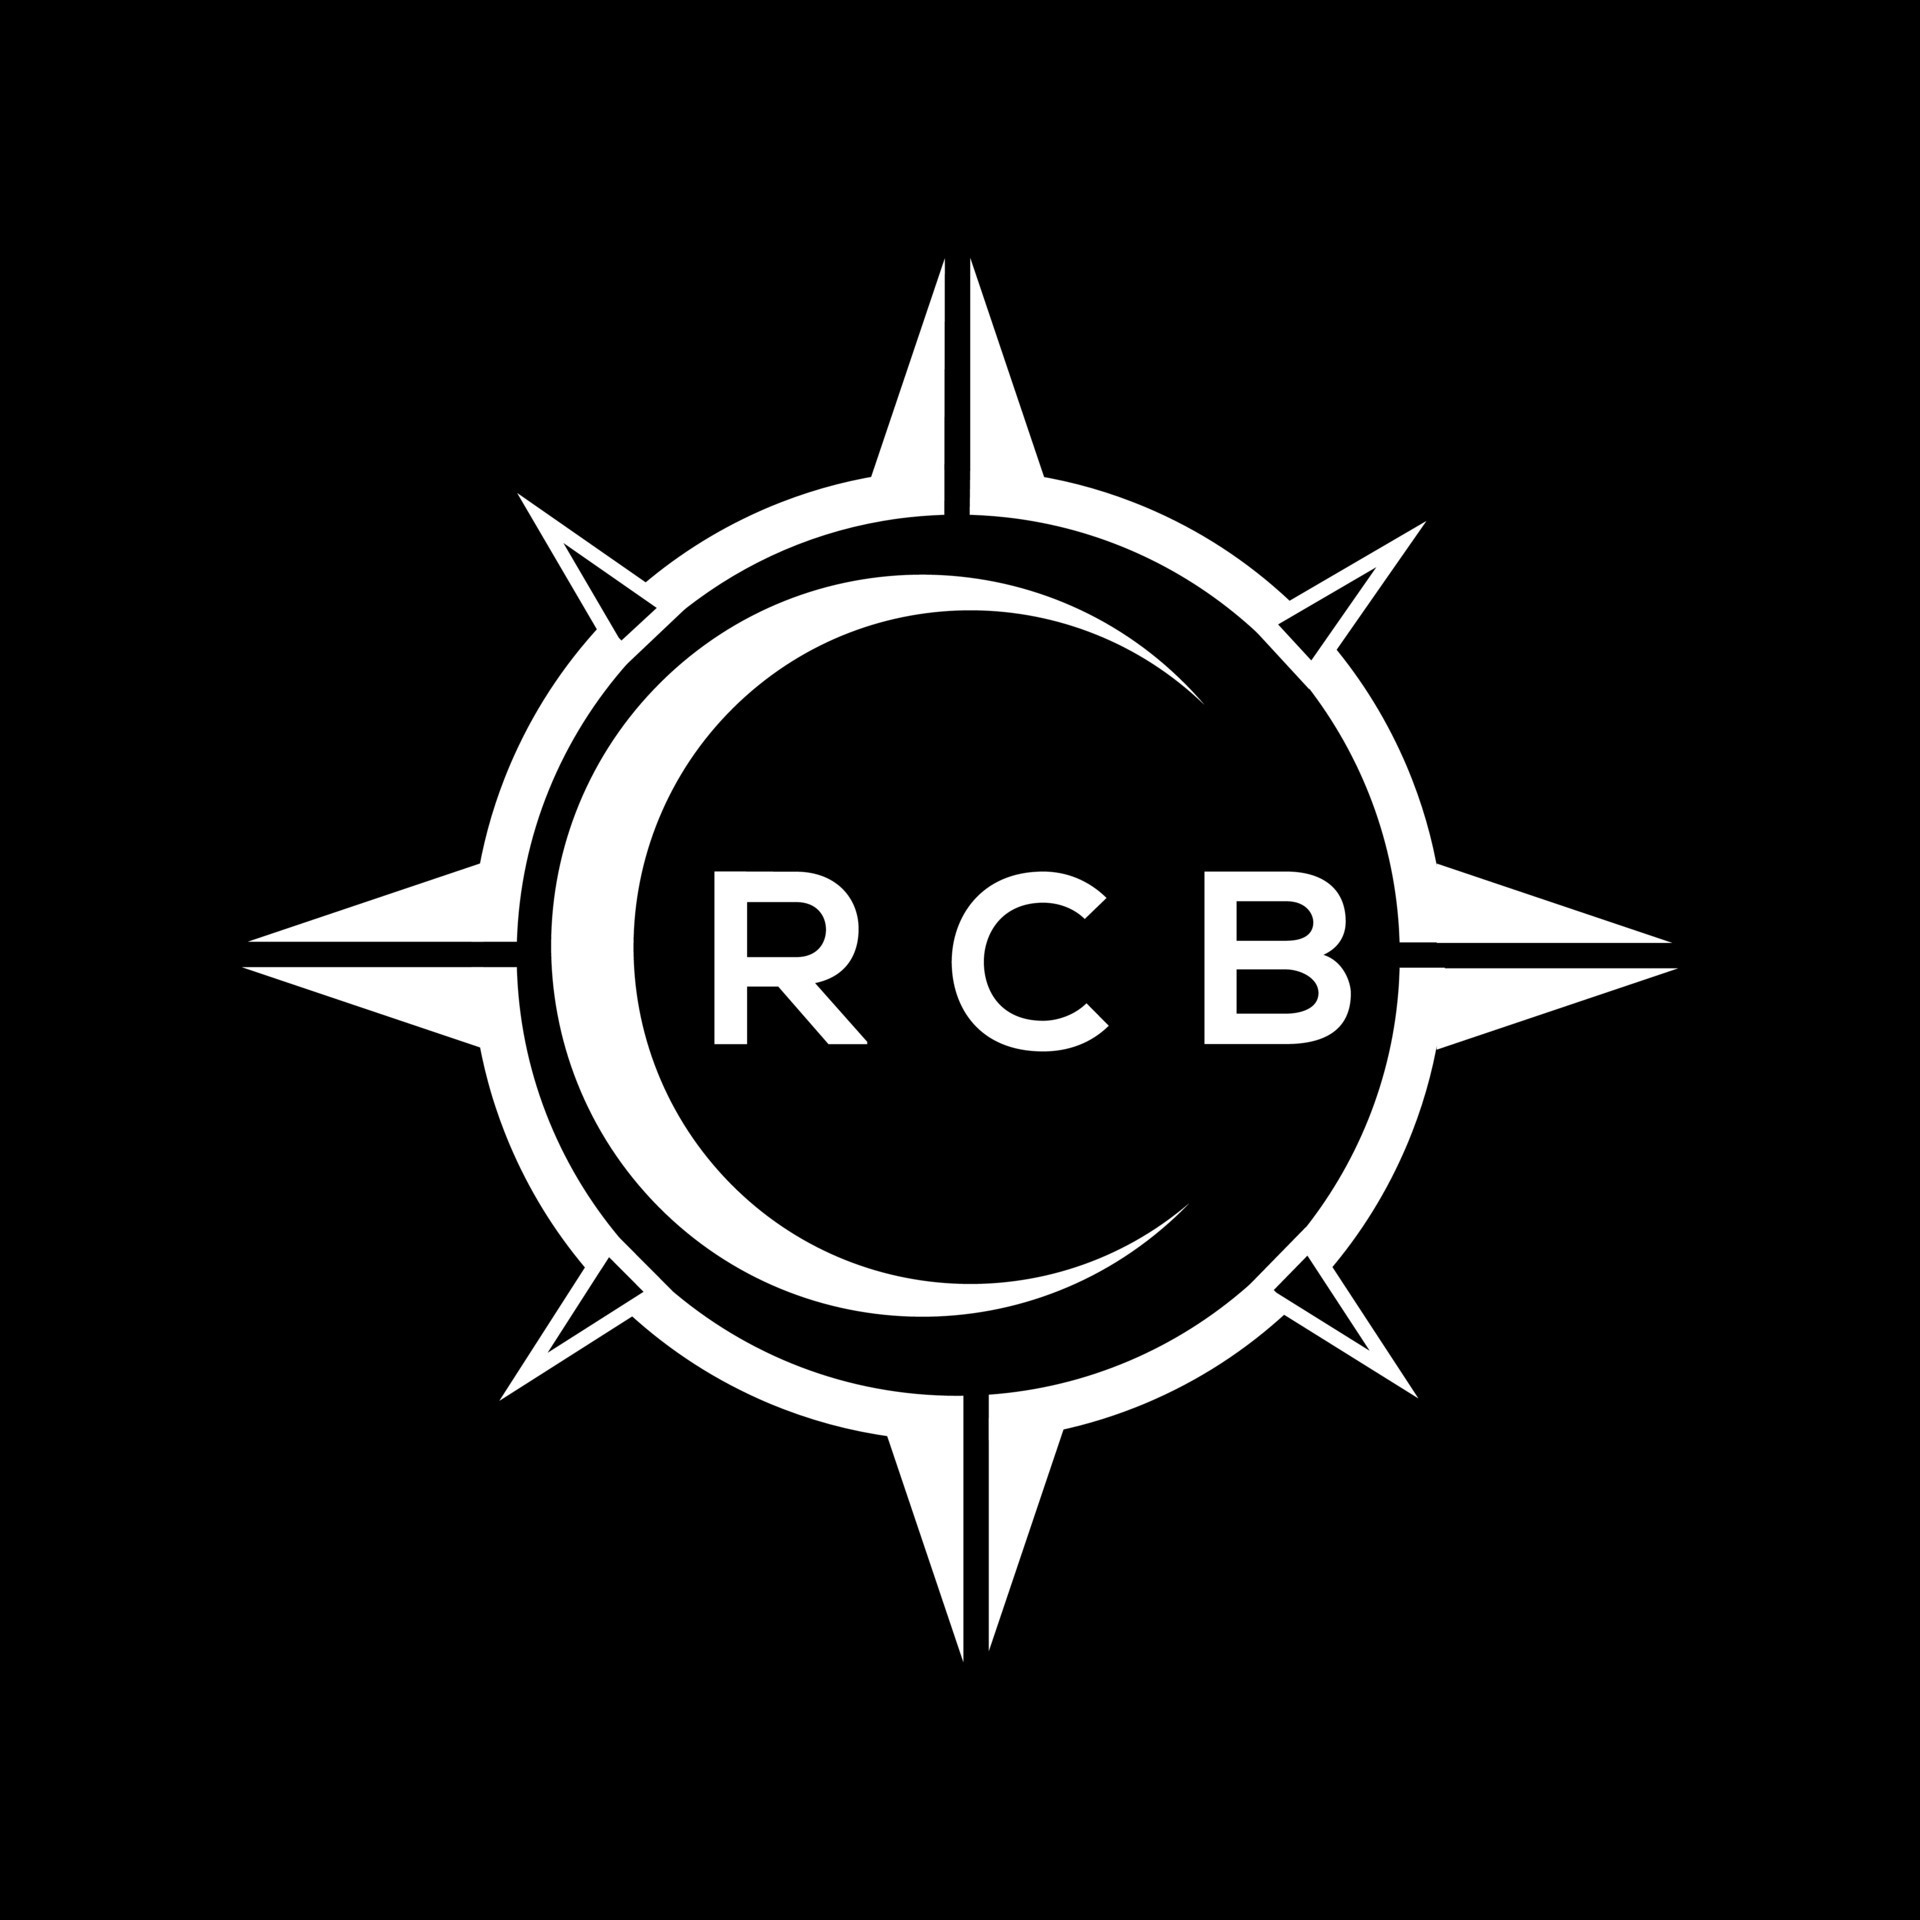 RCB release logo for 'Go Green' match against RR | Sports-Games-nextbuild.com.vn